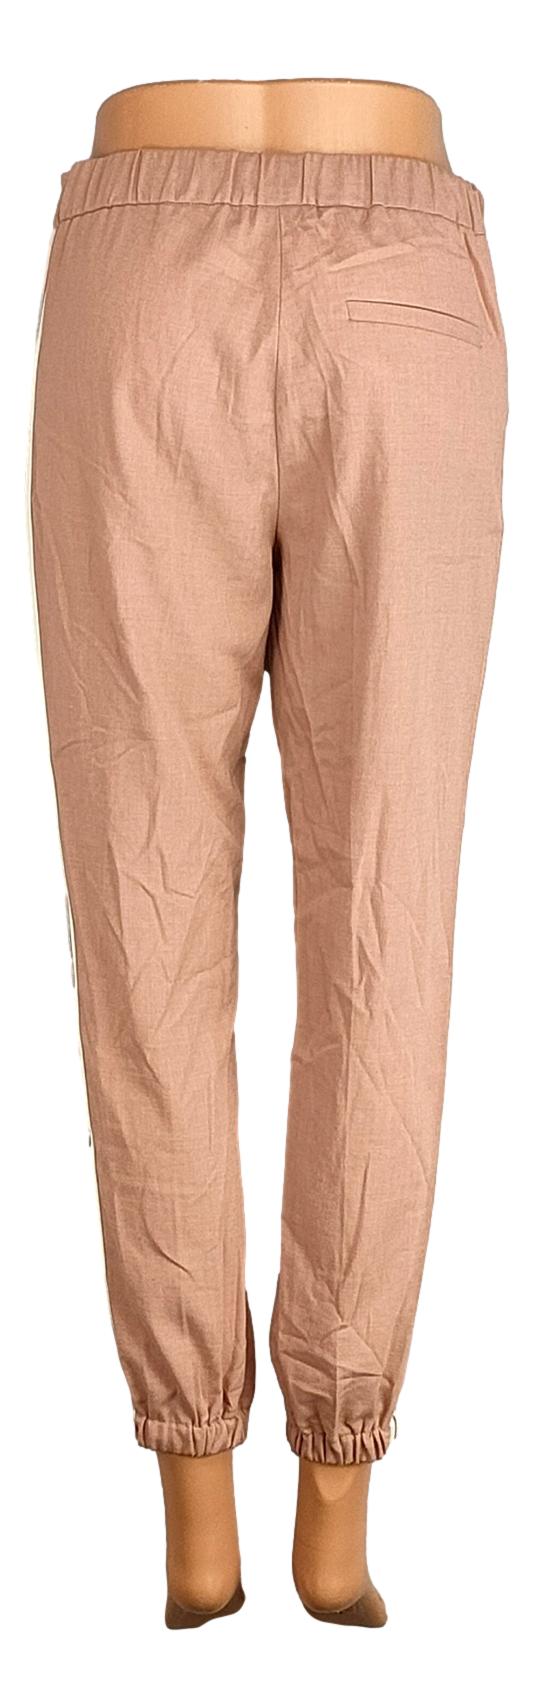 Pantalon Esprit - Taille 36